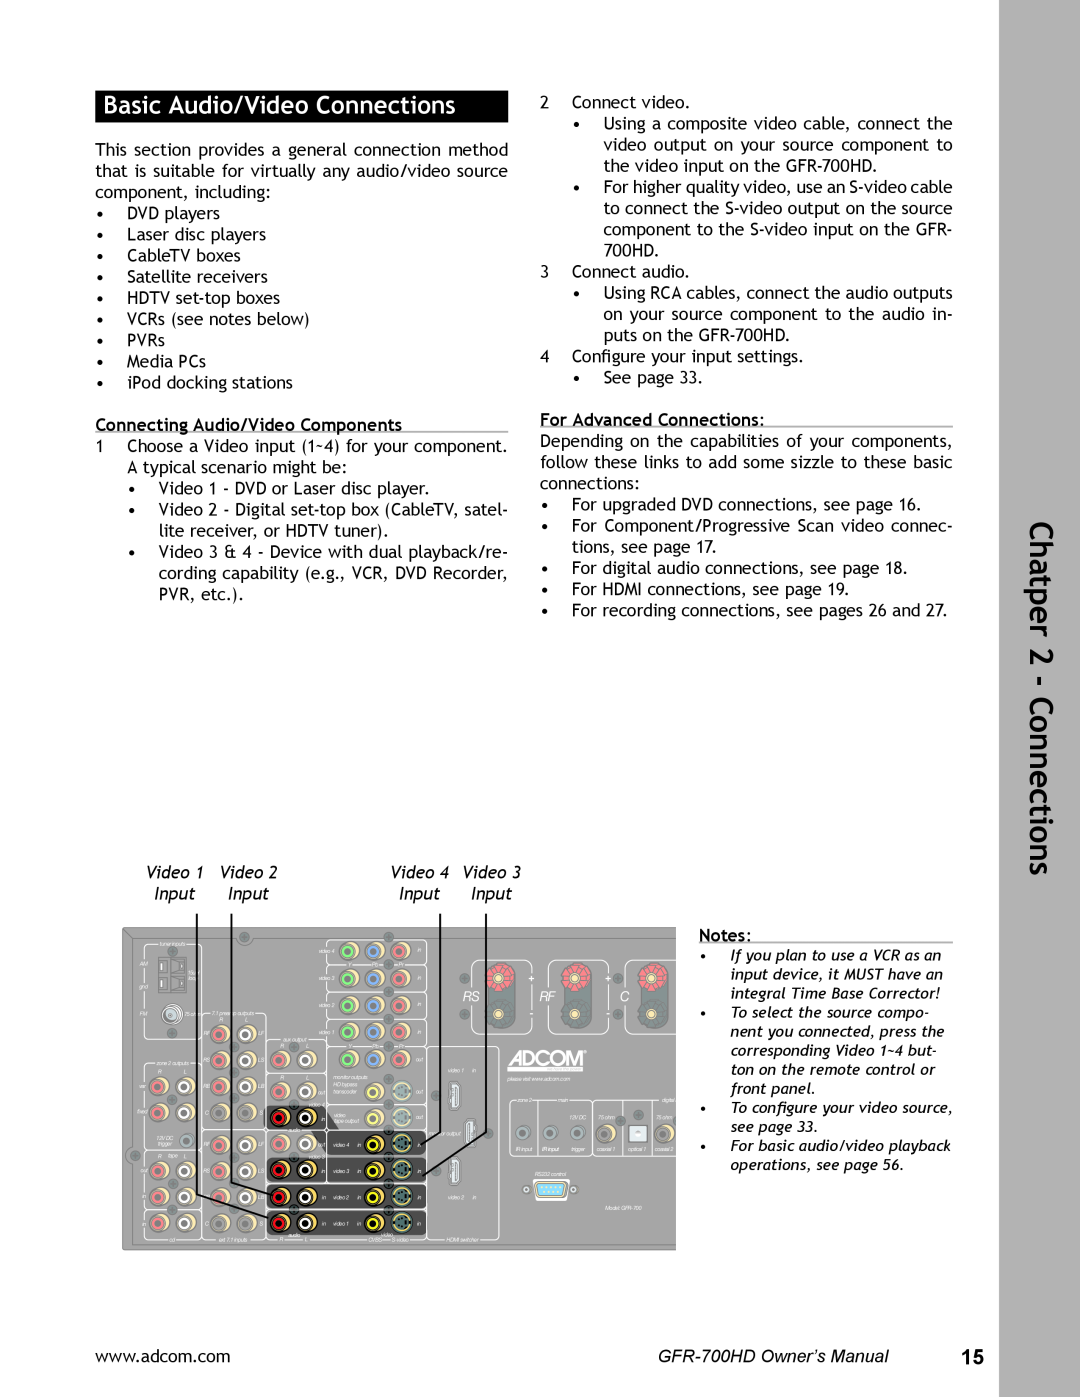 Adcom GFR-700HD Chatper 2 - Connections, Basic Audio/Video Connections, Connecting Audio/Video Components, Input 